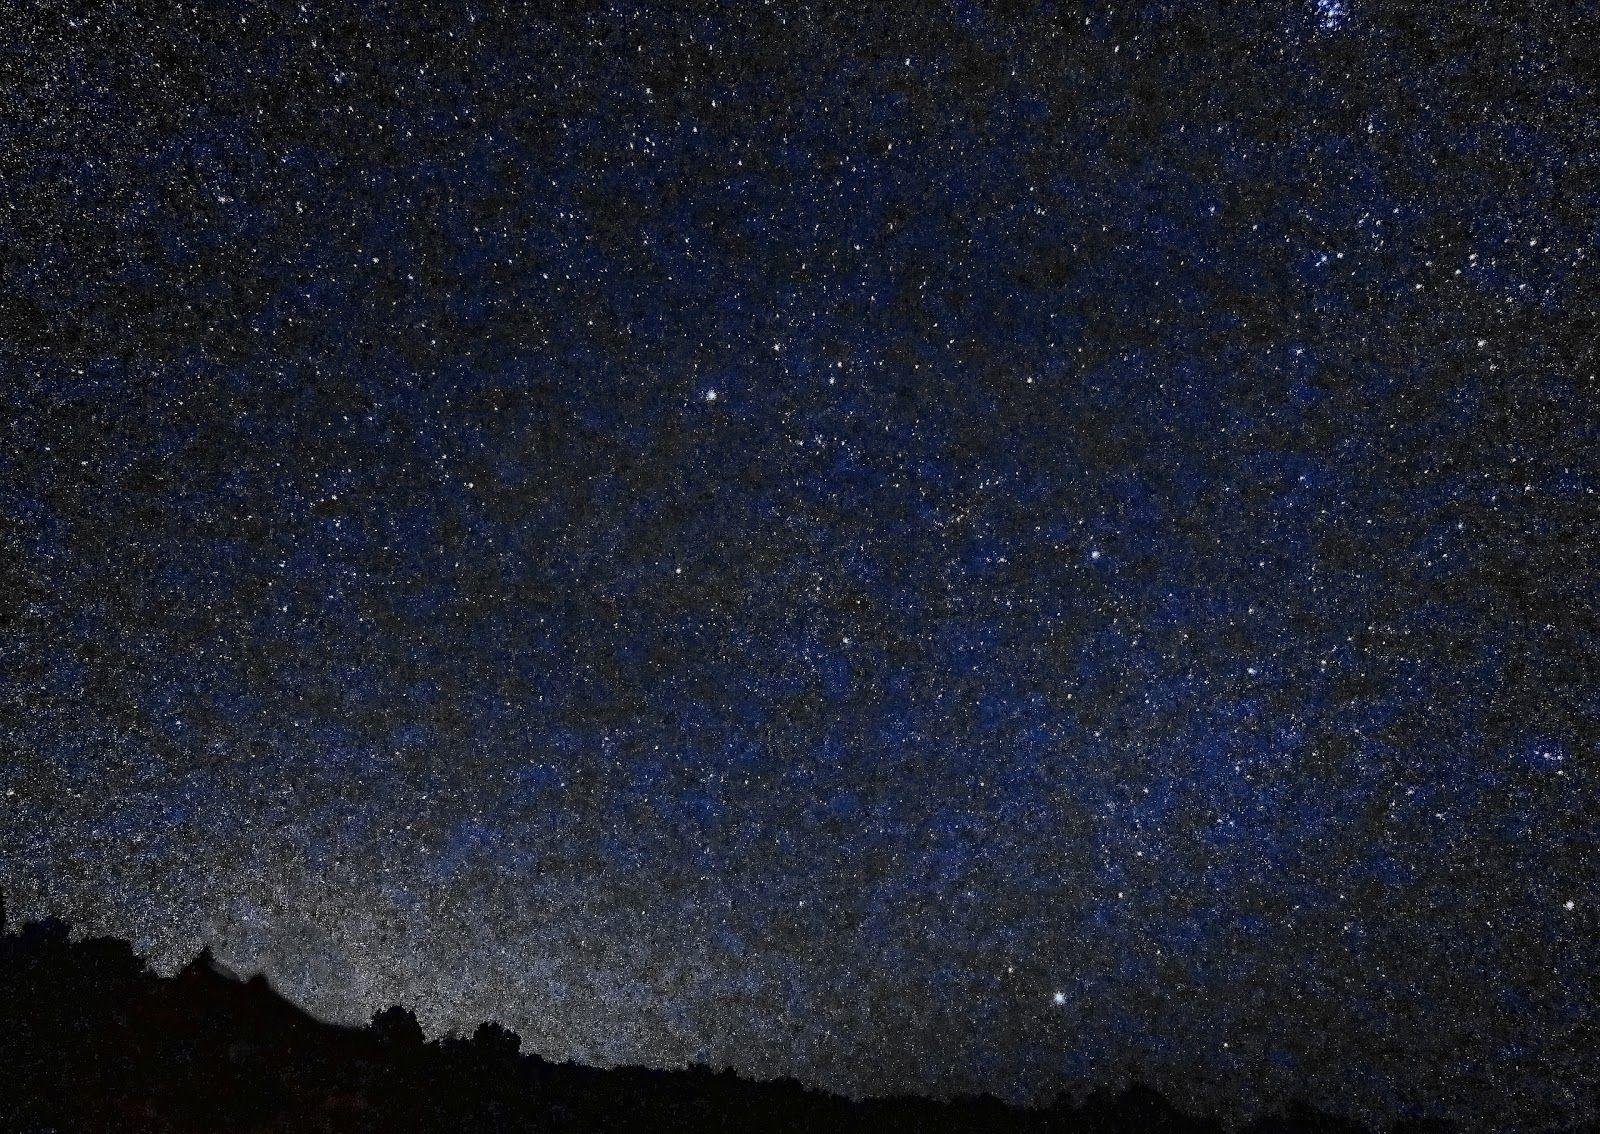 Download Starry Night Sky Wallpaper